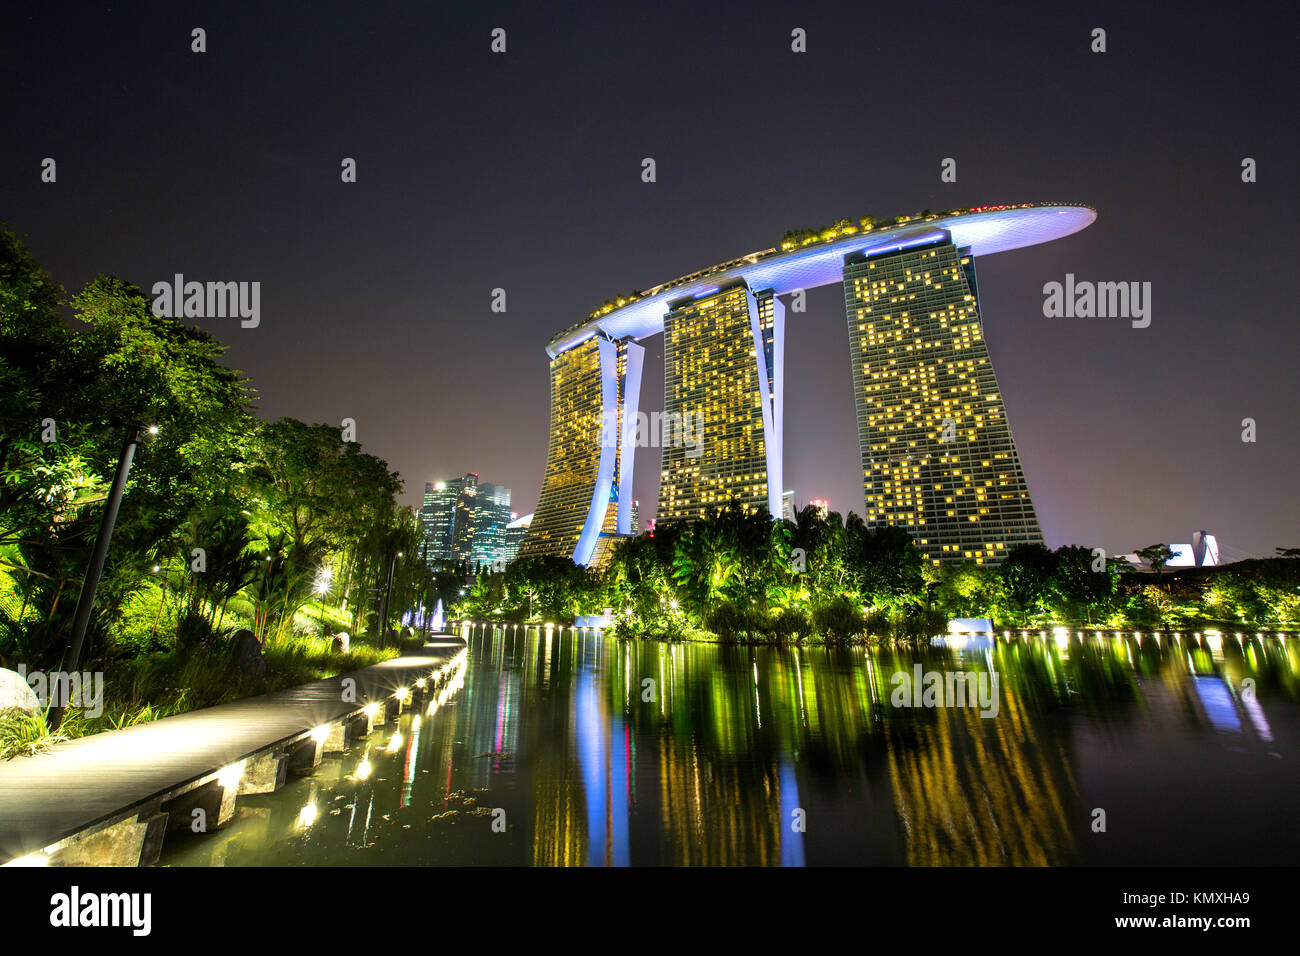 Singapur, Asien, Singapur reisen Fotos, Urlaub in Singapur, Singapur reisen Bilder, pradeep Subramanian Stockfoto